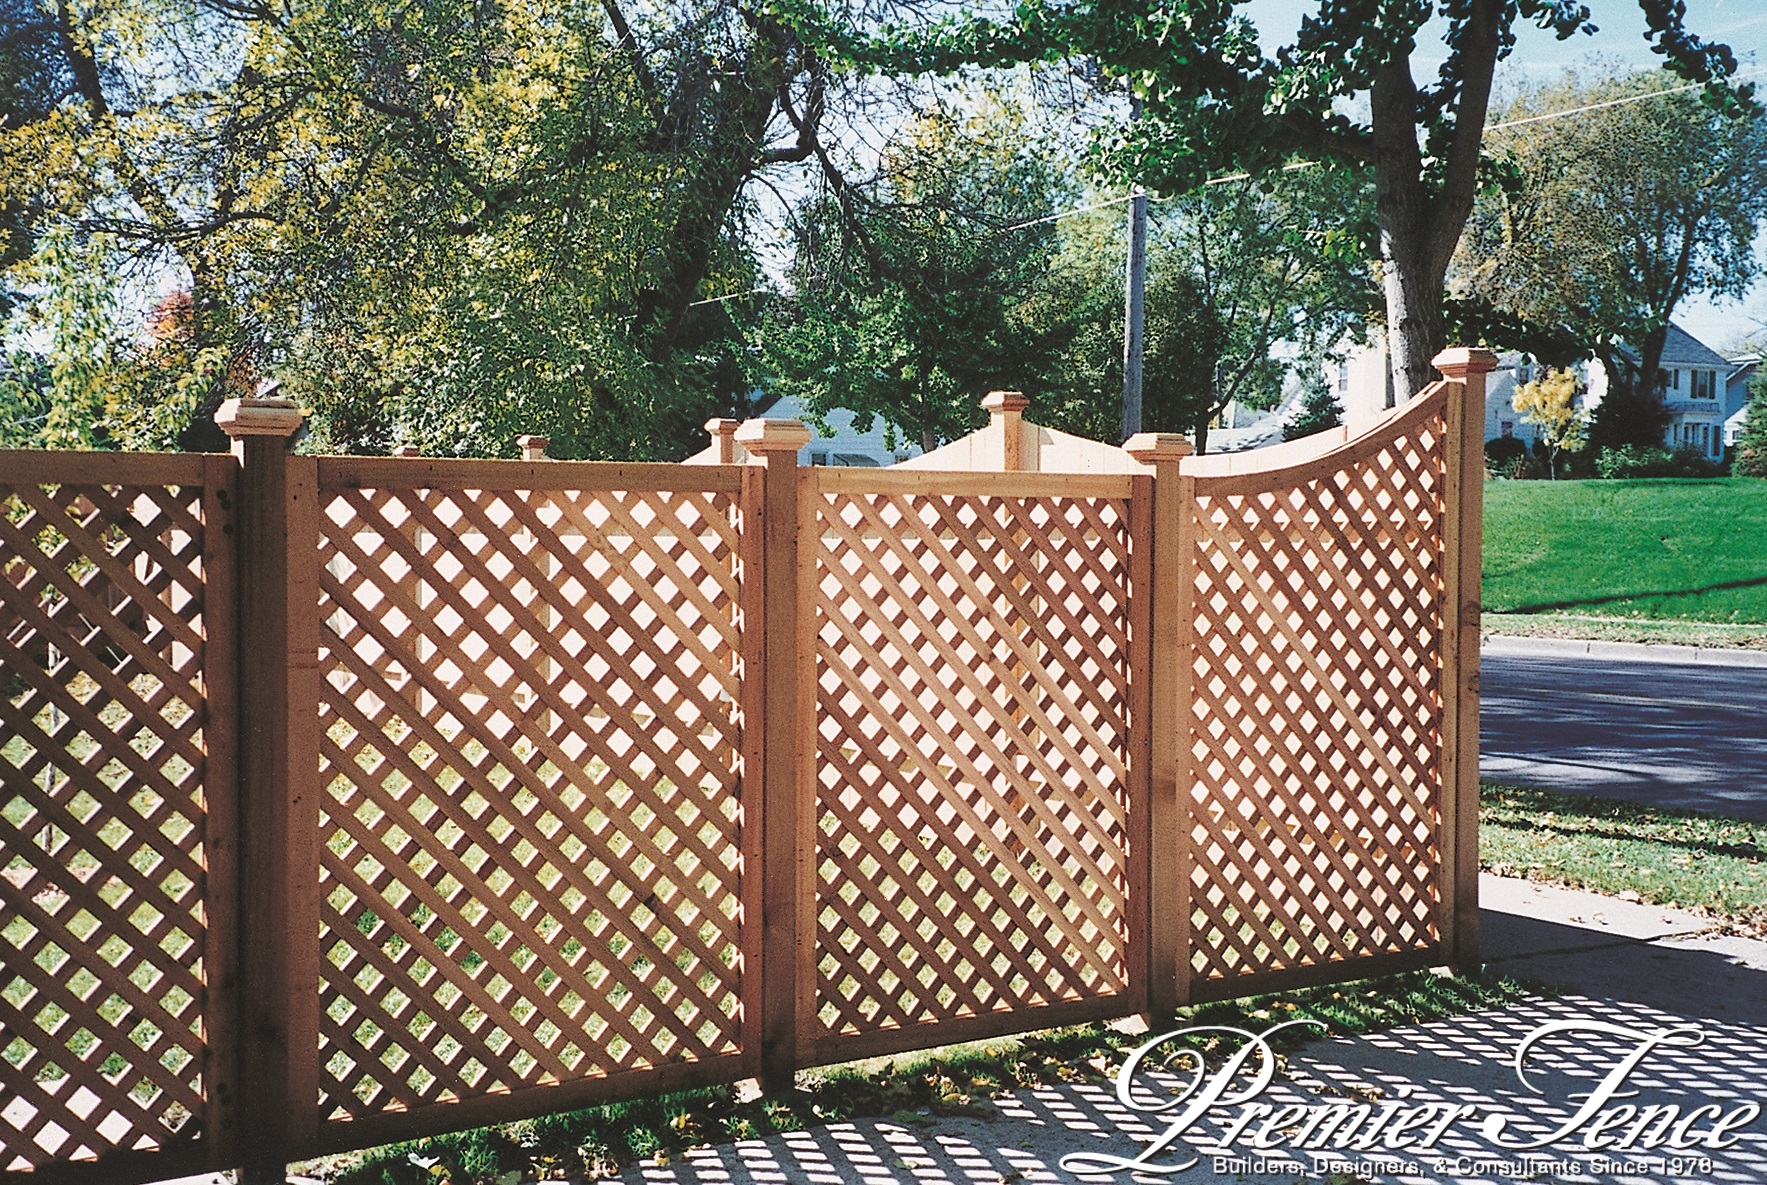 wood fences with lattice tops